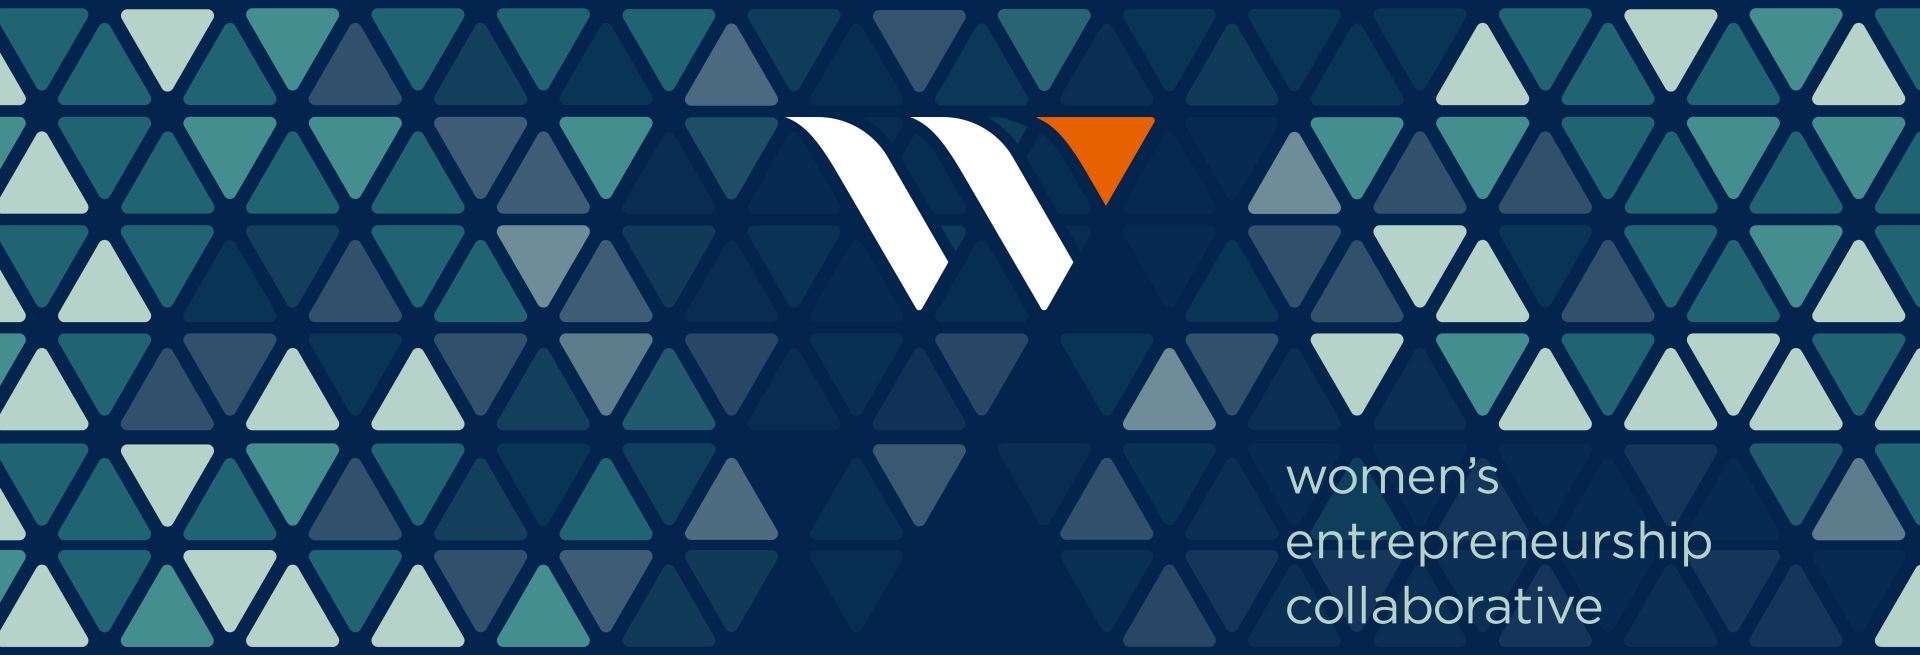 Women's Entrepreneurship Summit logo and pattern